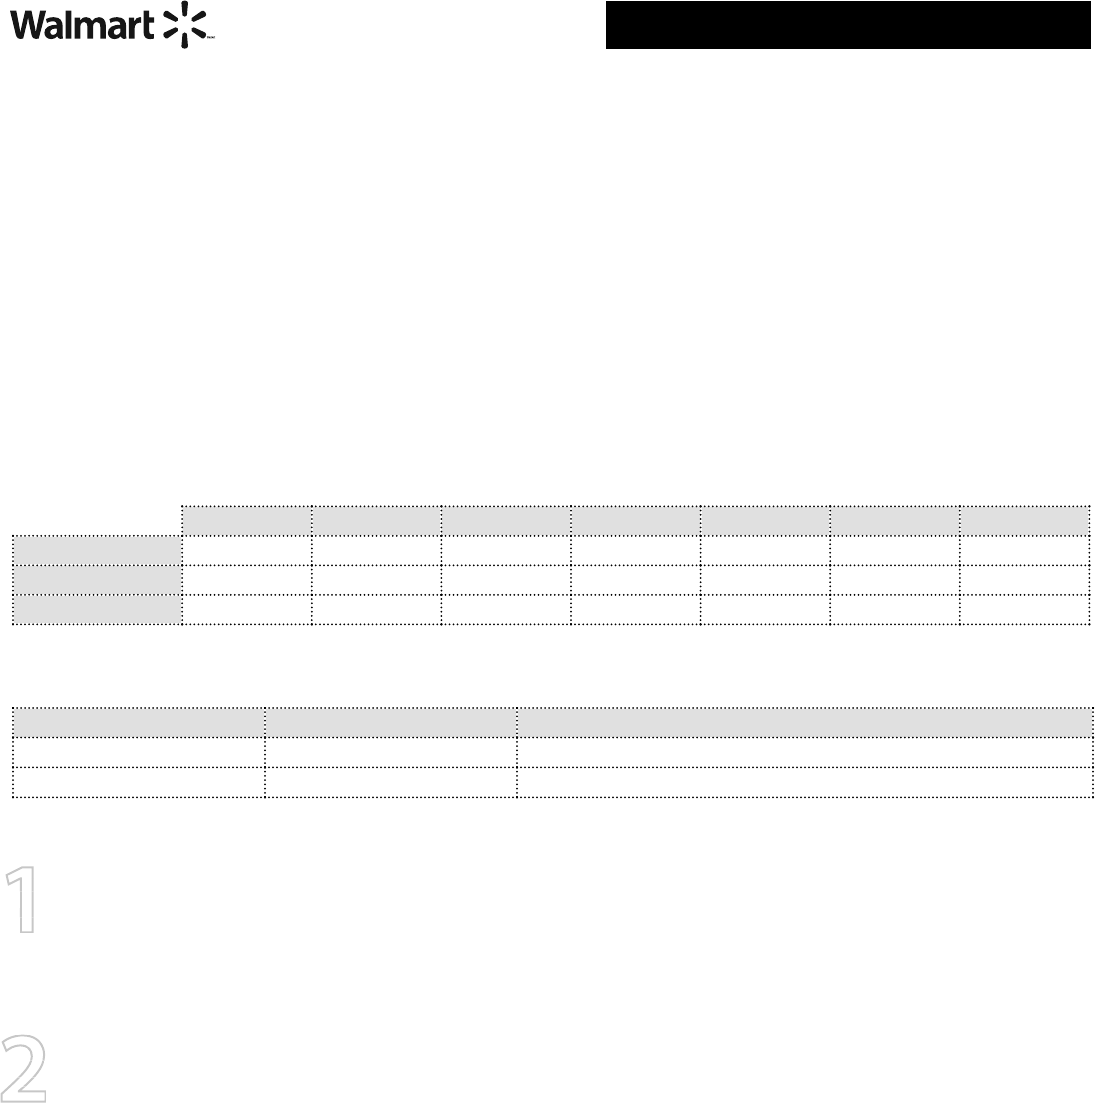 Free Walmart Application Form Pdf 150kb 1 Pages